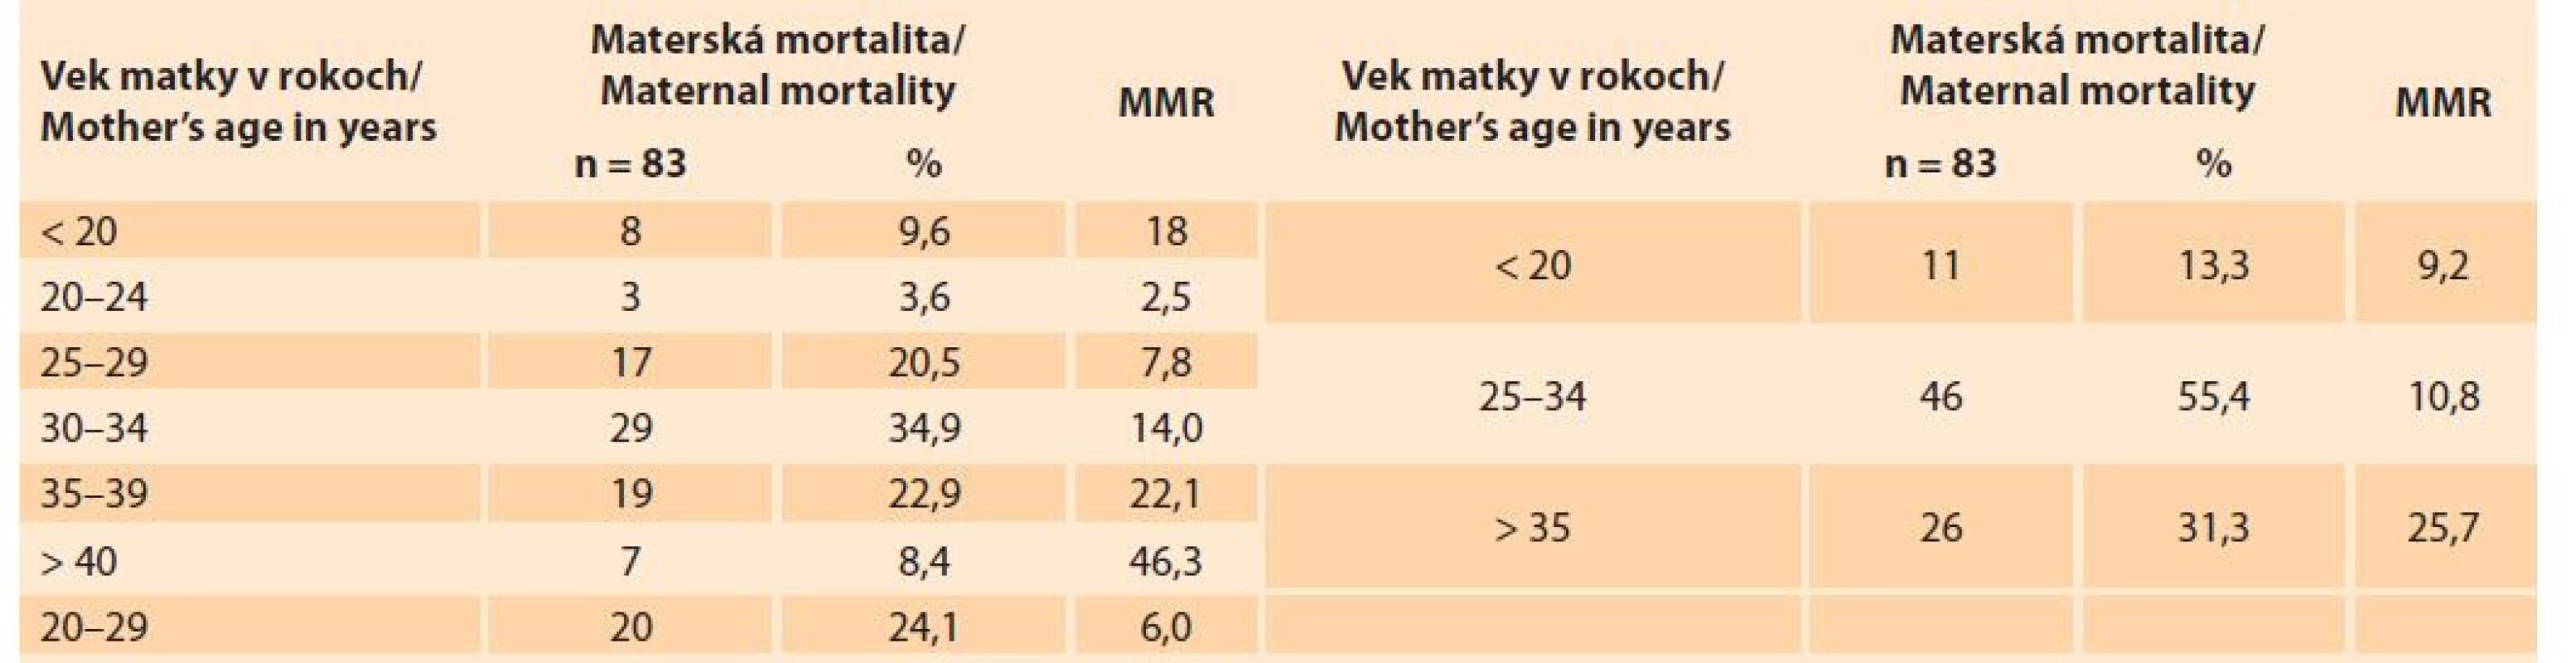 Materská mortalita na Slovensku v rokoch 2007–2018 podľa veku (zdroj: SGPS).<br>
Tab. 3. Maternal mortality by age in Slovakia in the years 2007–2018 (source: SGPS).